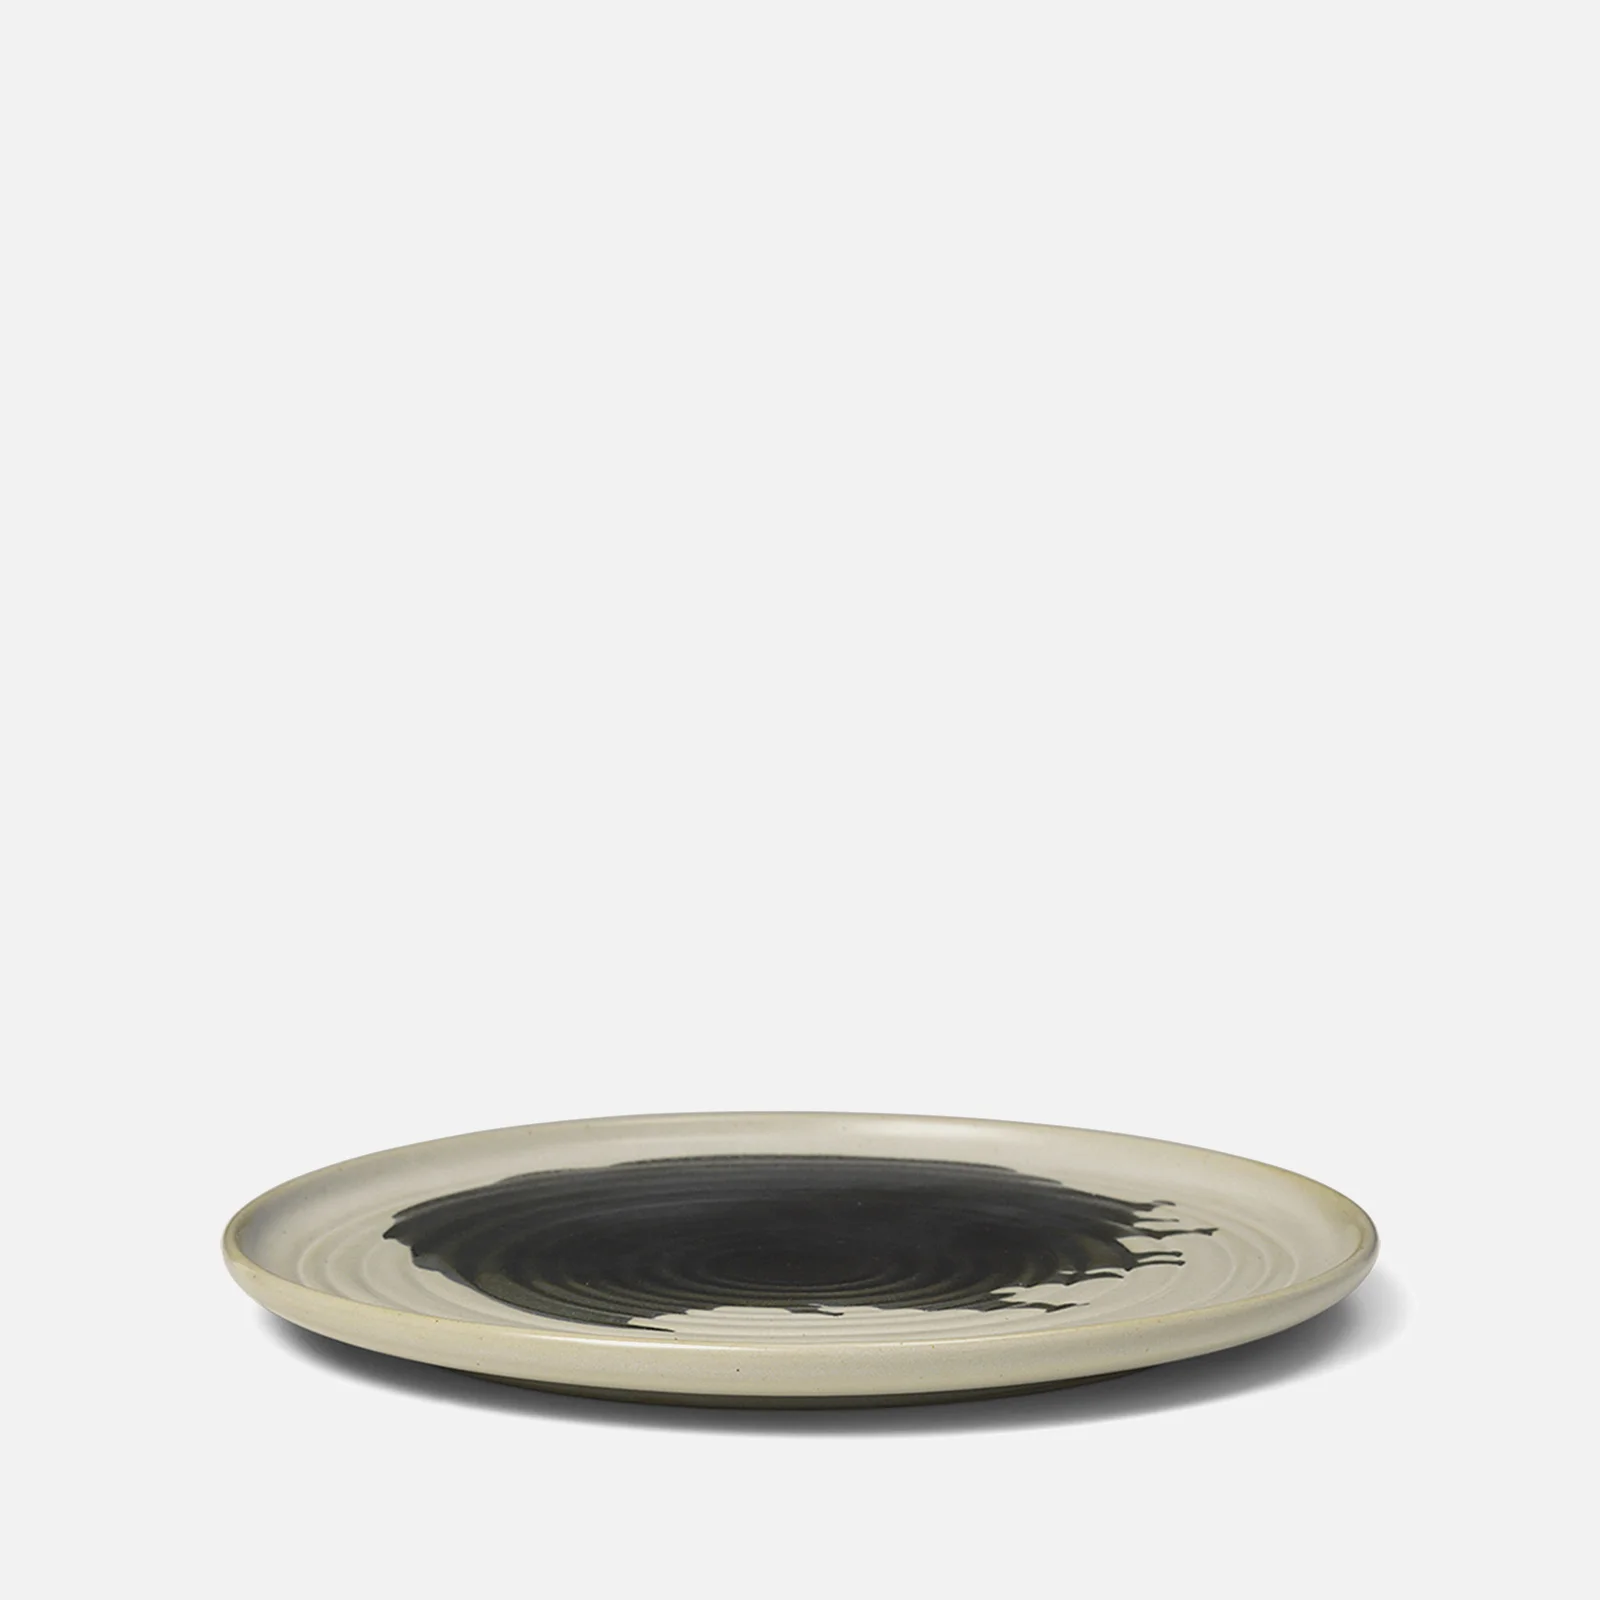 Ferm Living Omhu Plate - Medium - Off white/charcoal Image 1